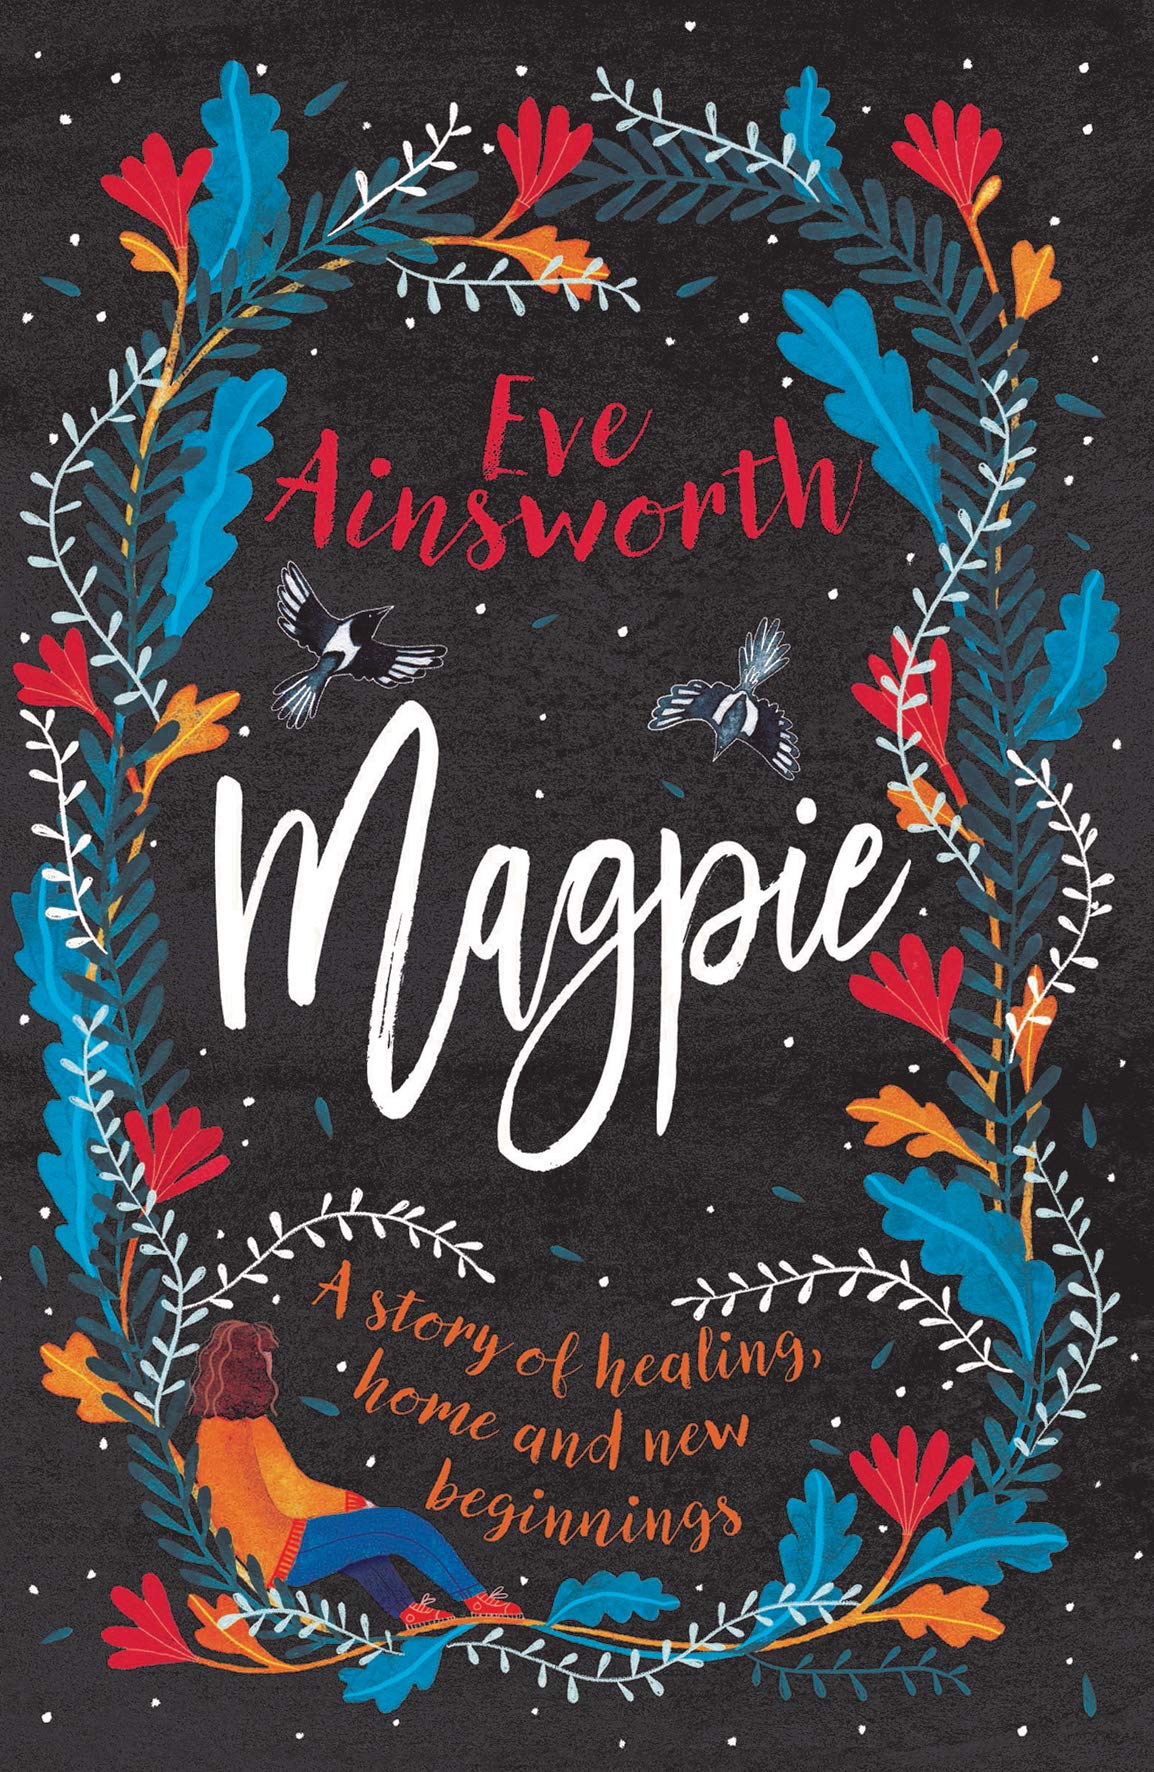 Magpie | Eve Ainsworth